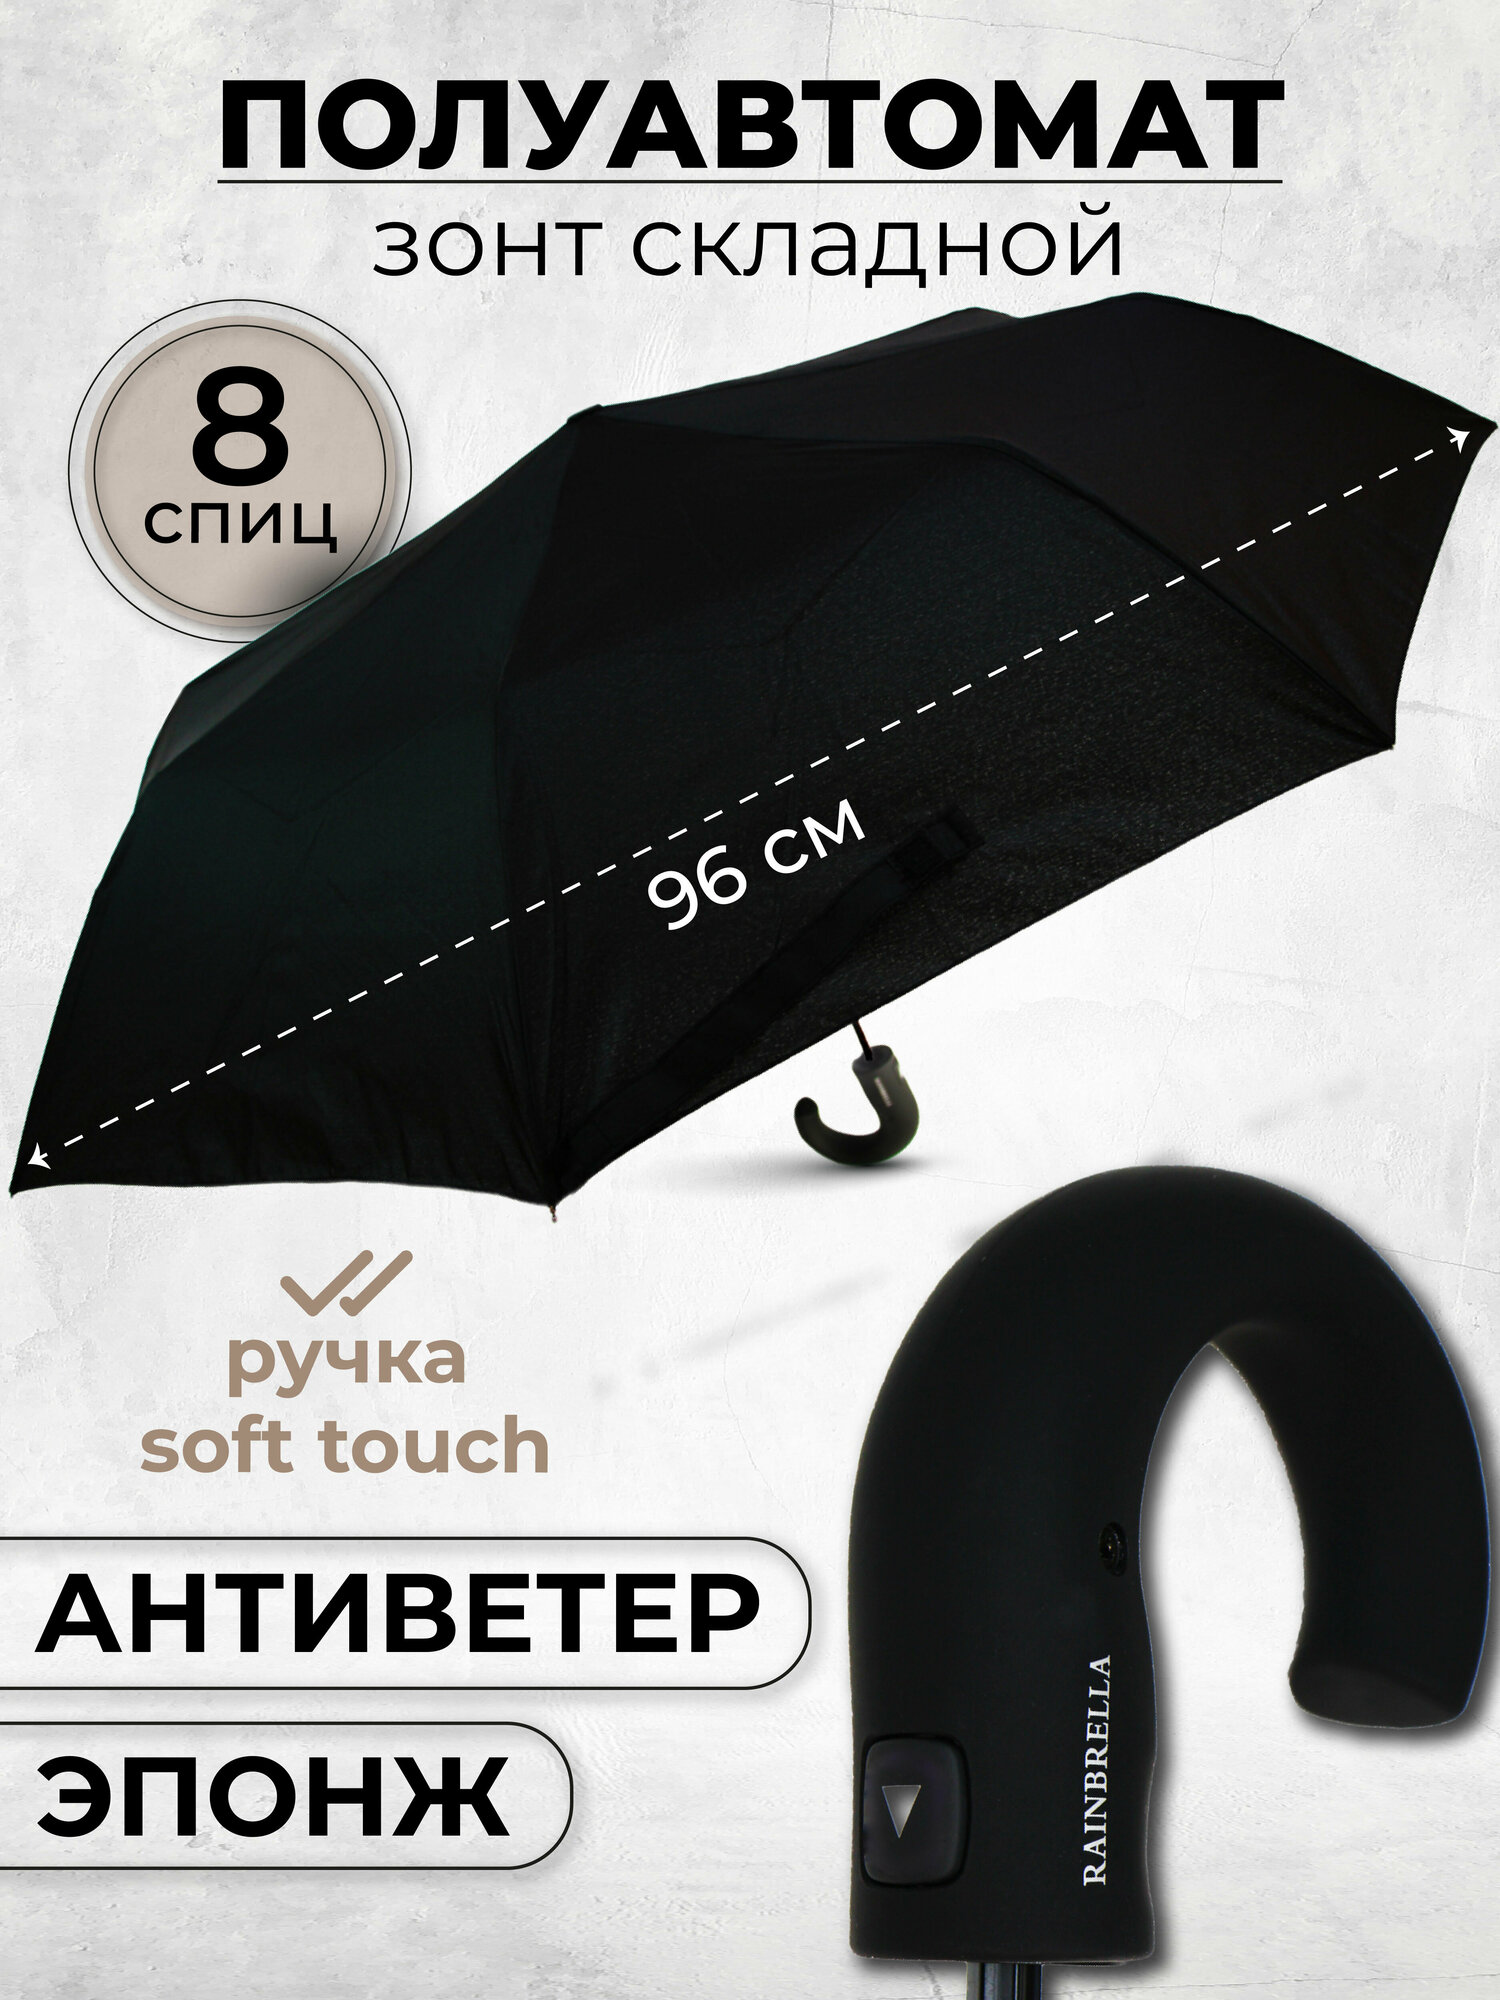 Мини-зонт Rainbrella